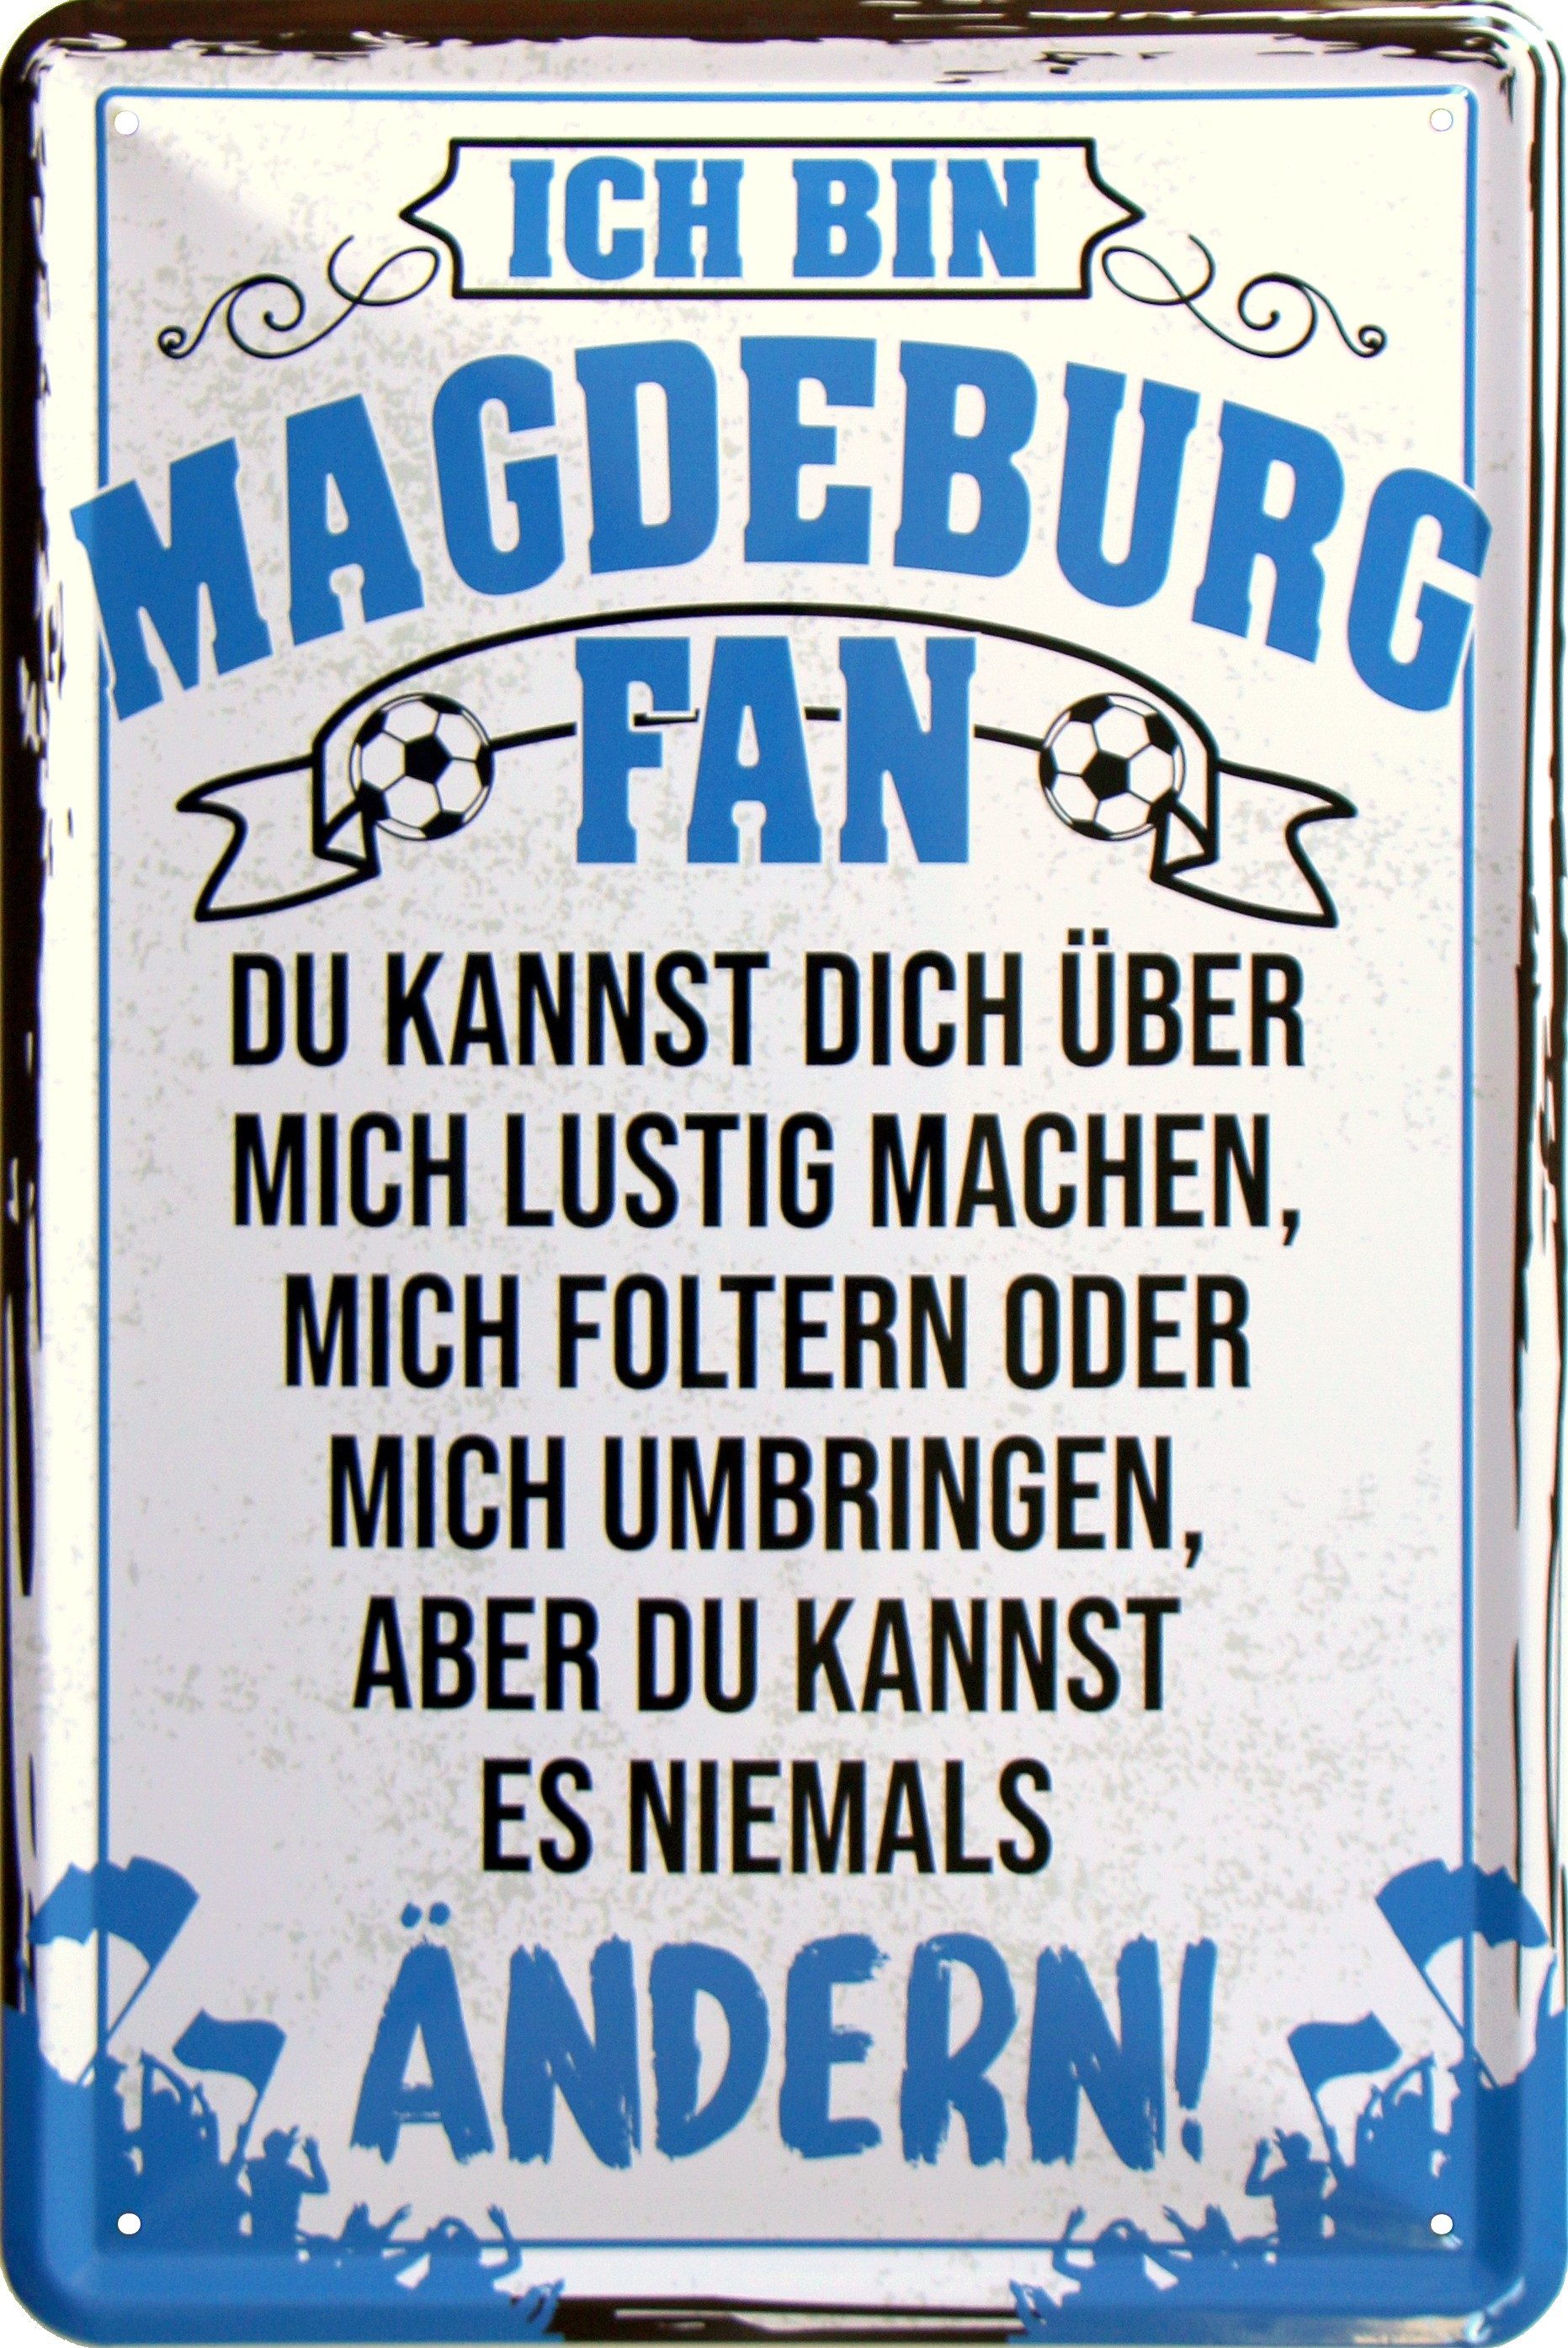 WOGEKA ART Metallbild Ich bin Magdeburg Fan - 20 x 30 cm Retro Blechschild Fußball Sport